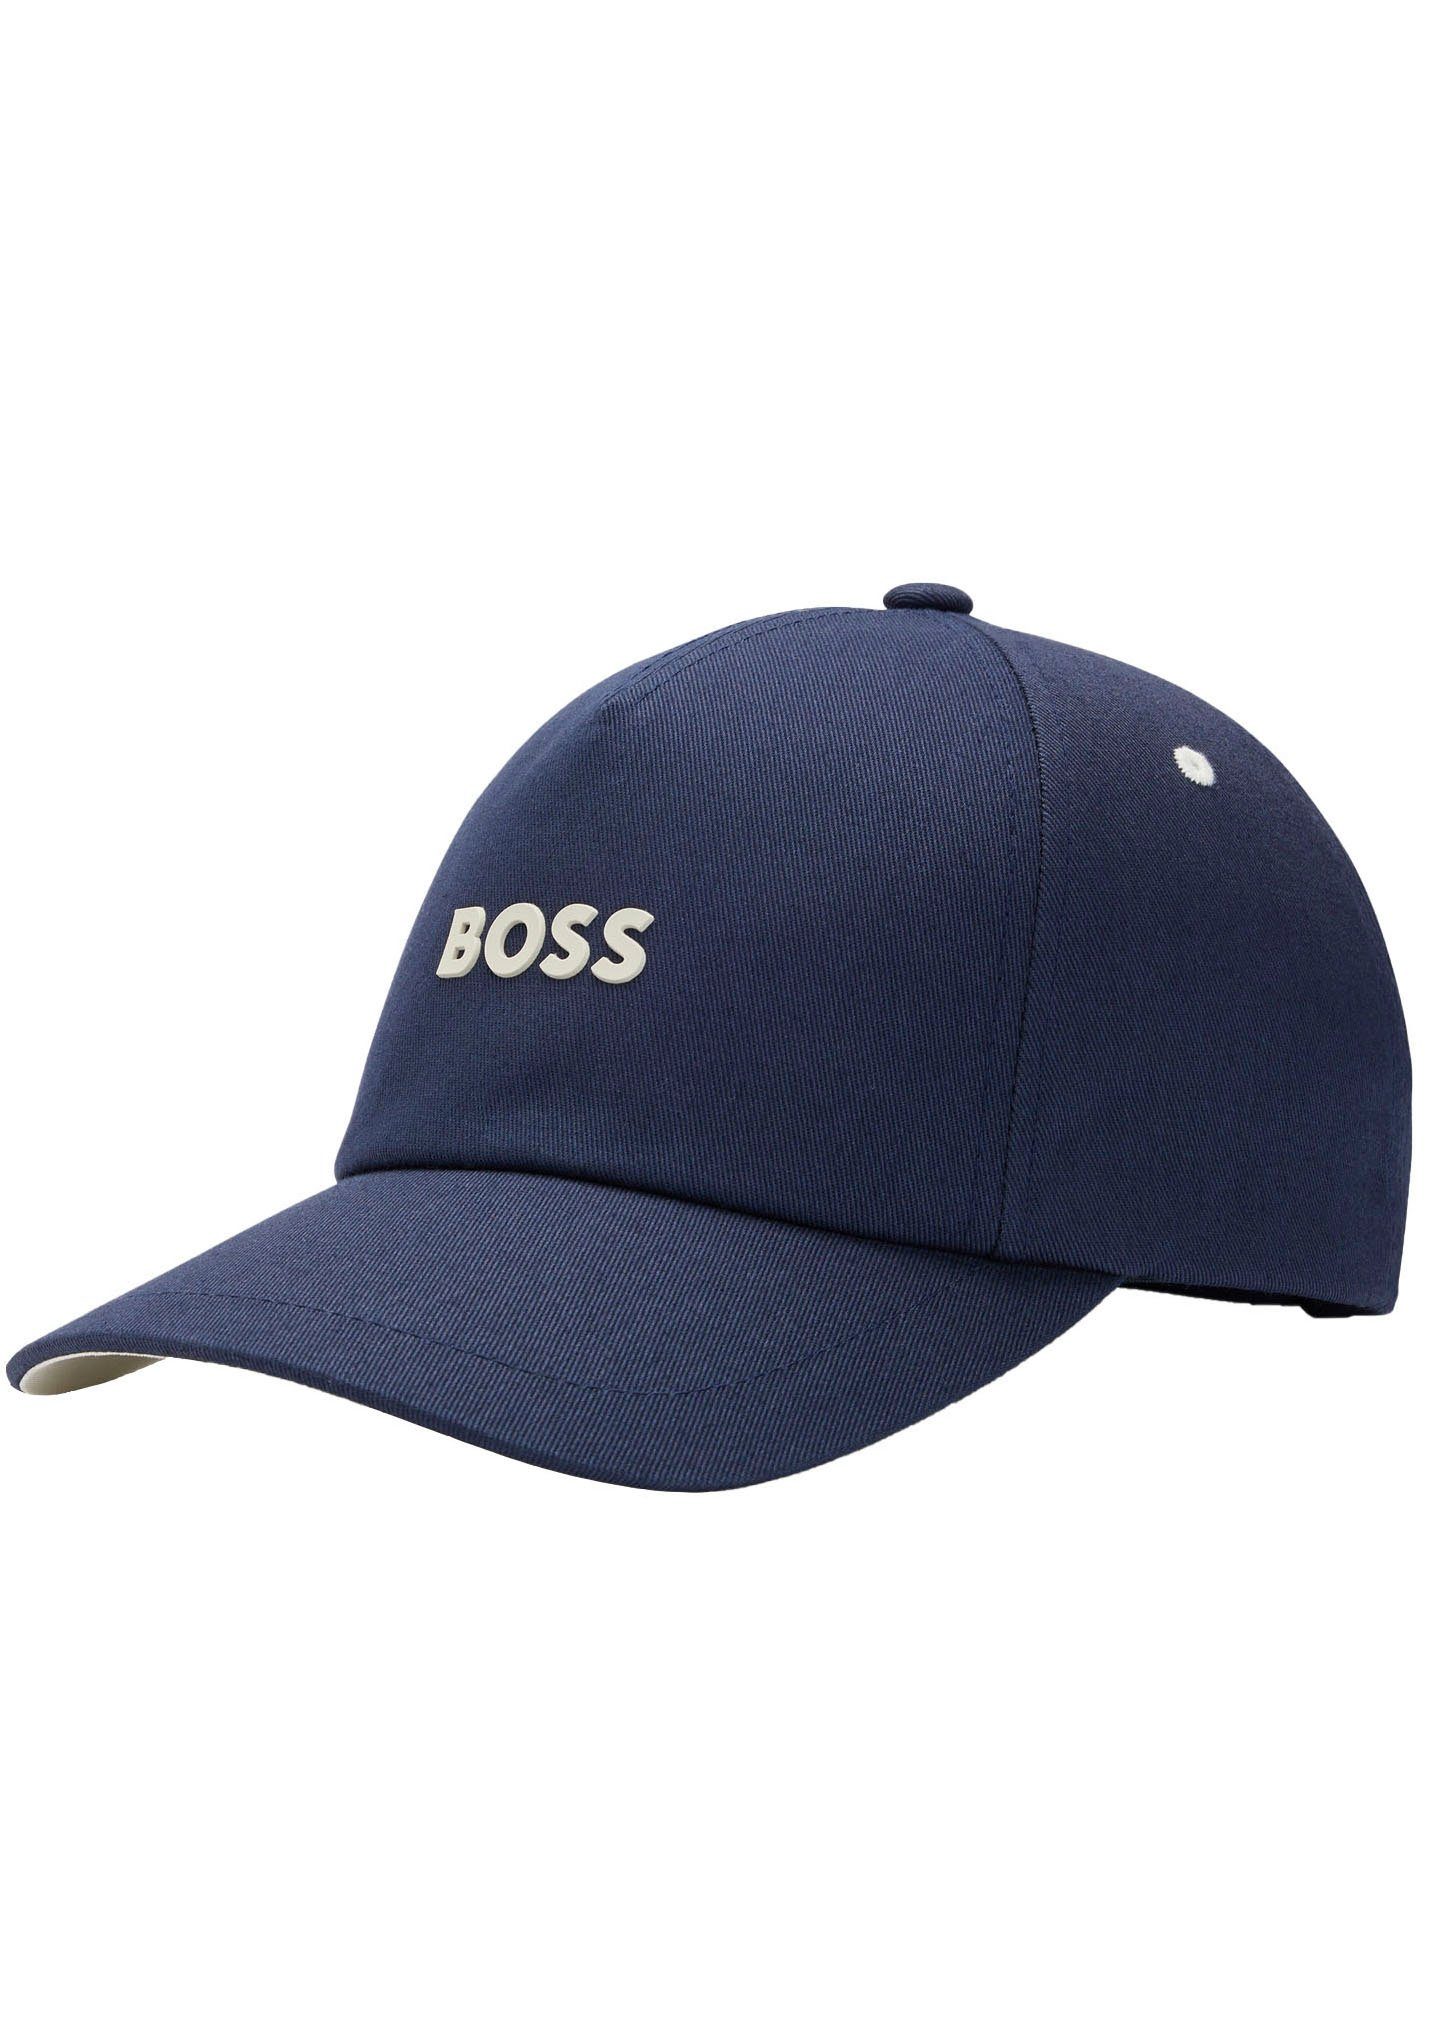 Fresco-3 dark-Blue Cap Baseball mit ORANGE BOSS Klettverschluss